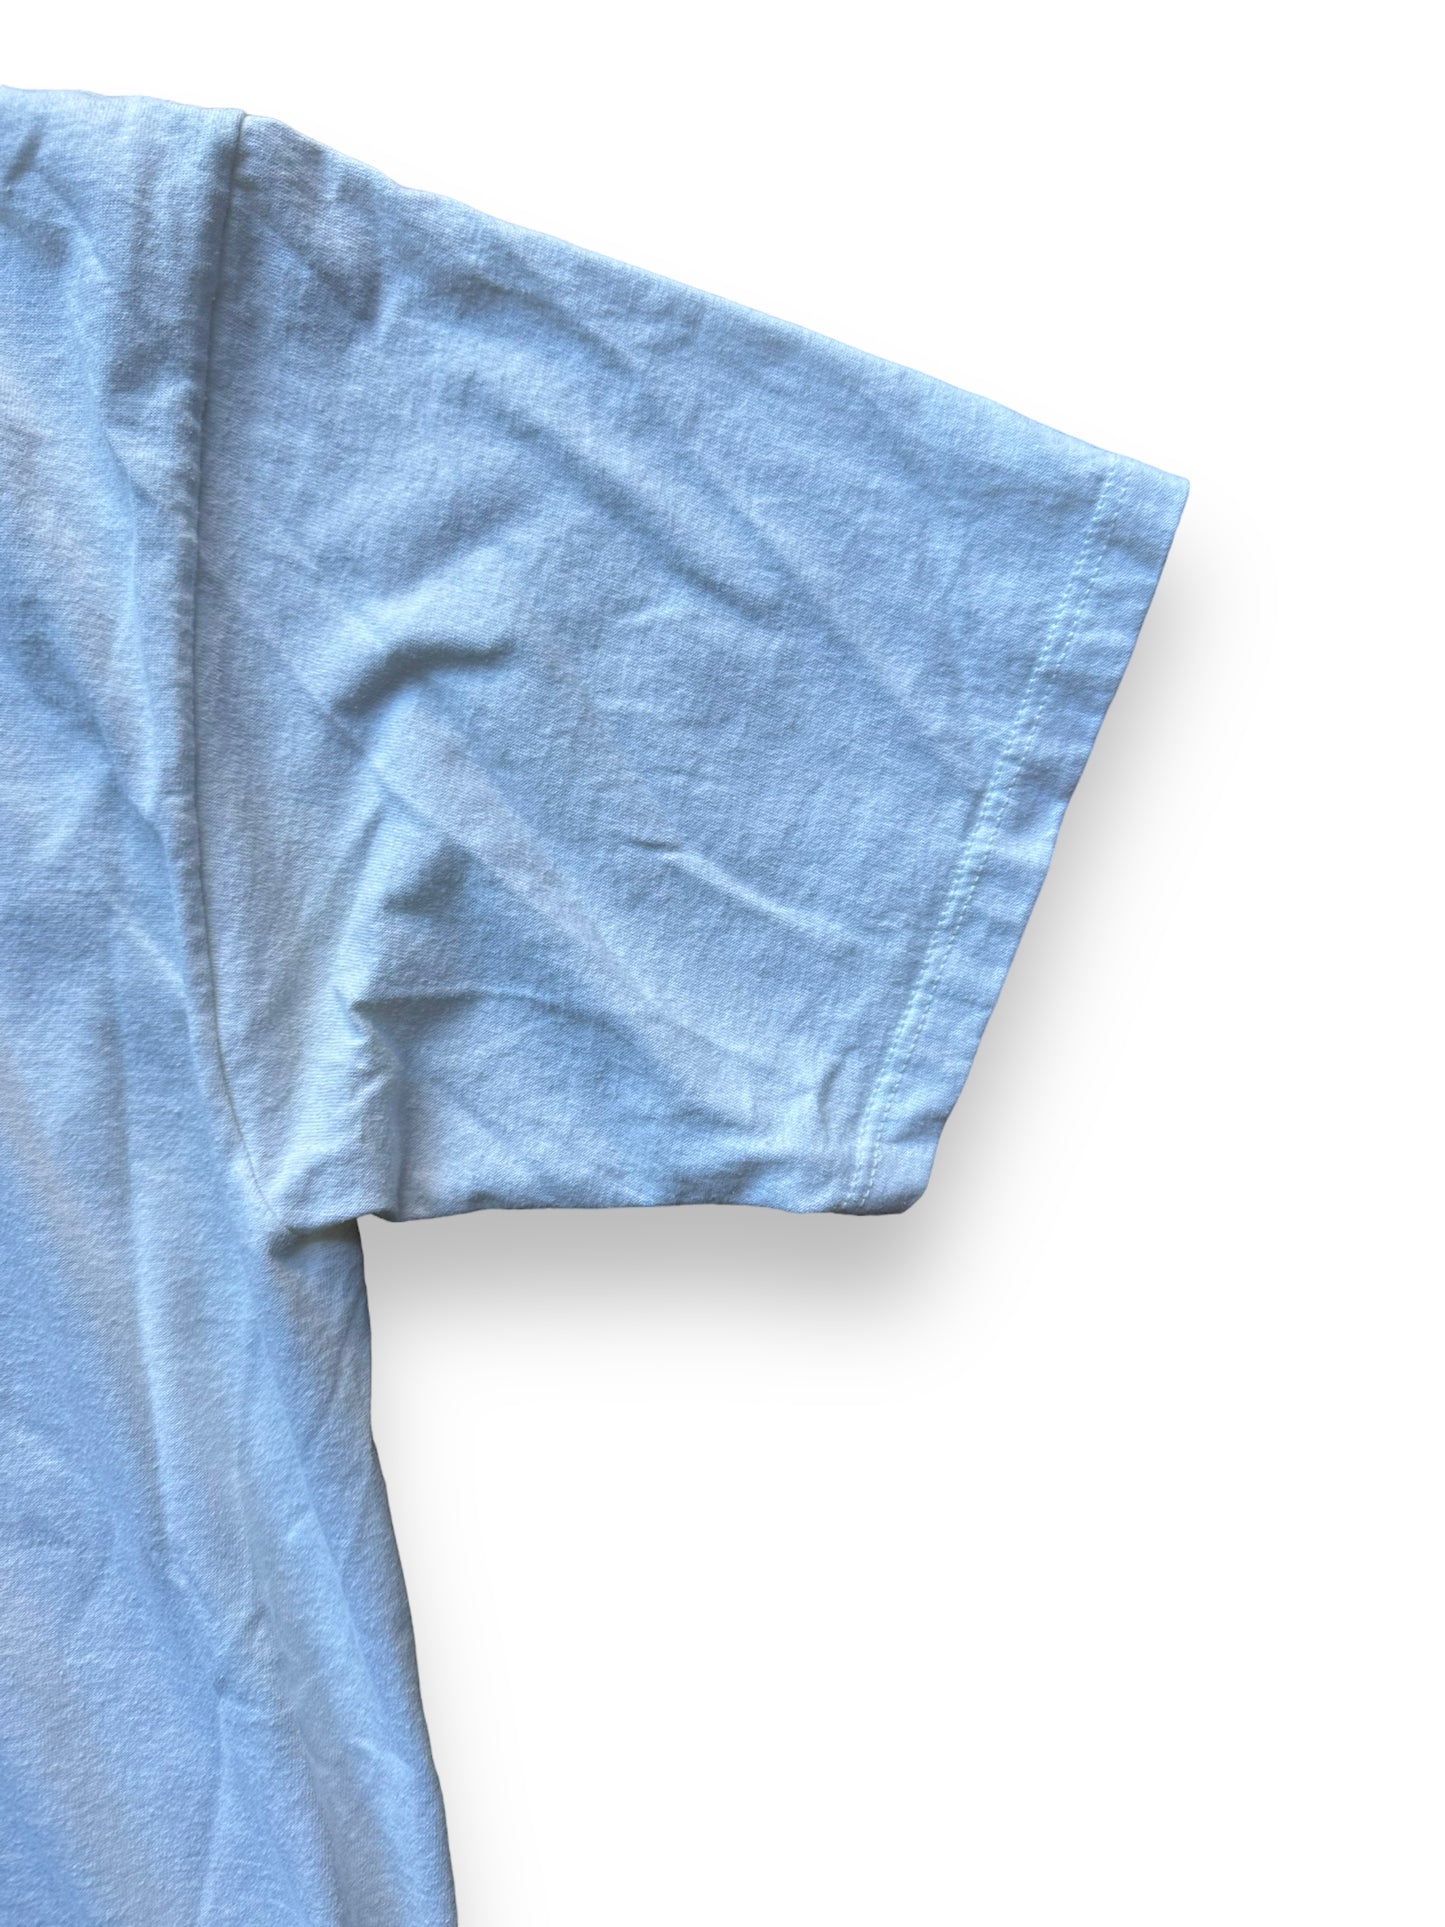 Sleeve of Vintage Pacific Street Tee SZ XL | Vintage T-Shirts Seattle | Barn Owl Vintage Tees Seattle